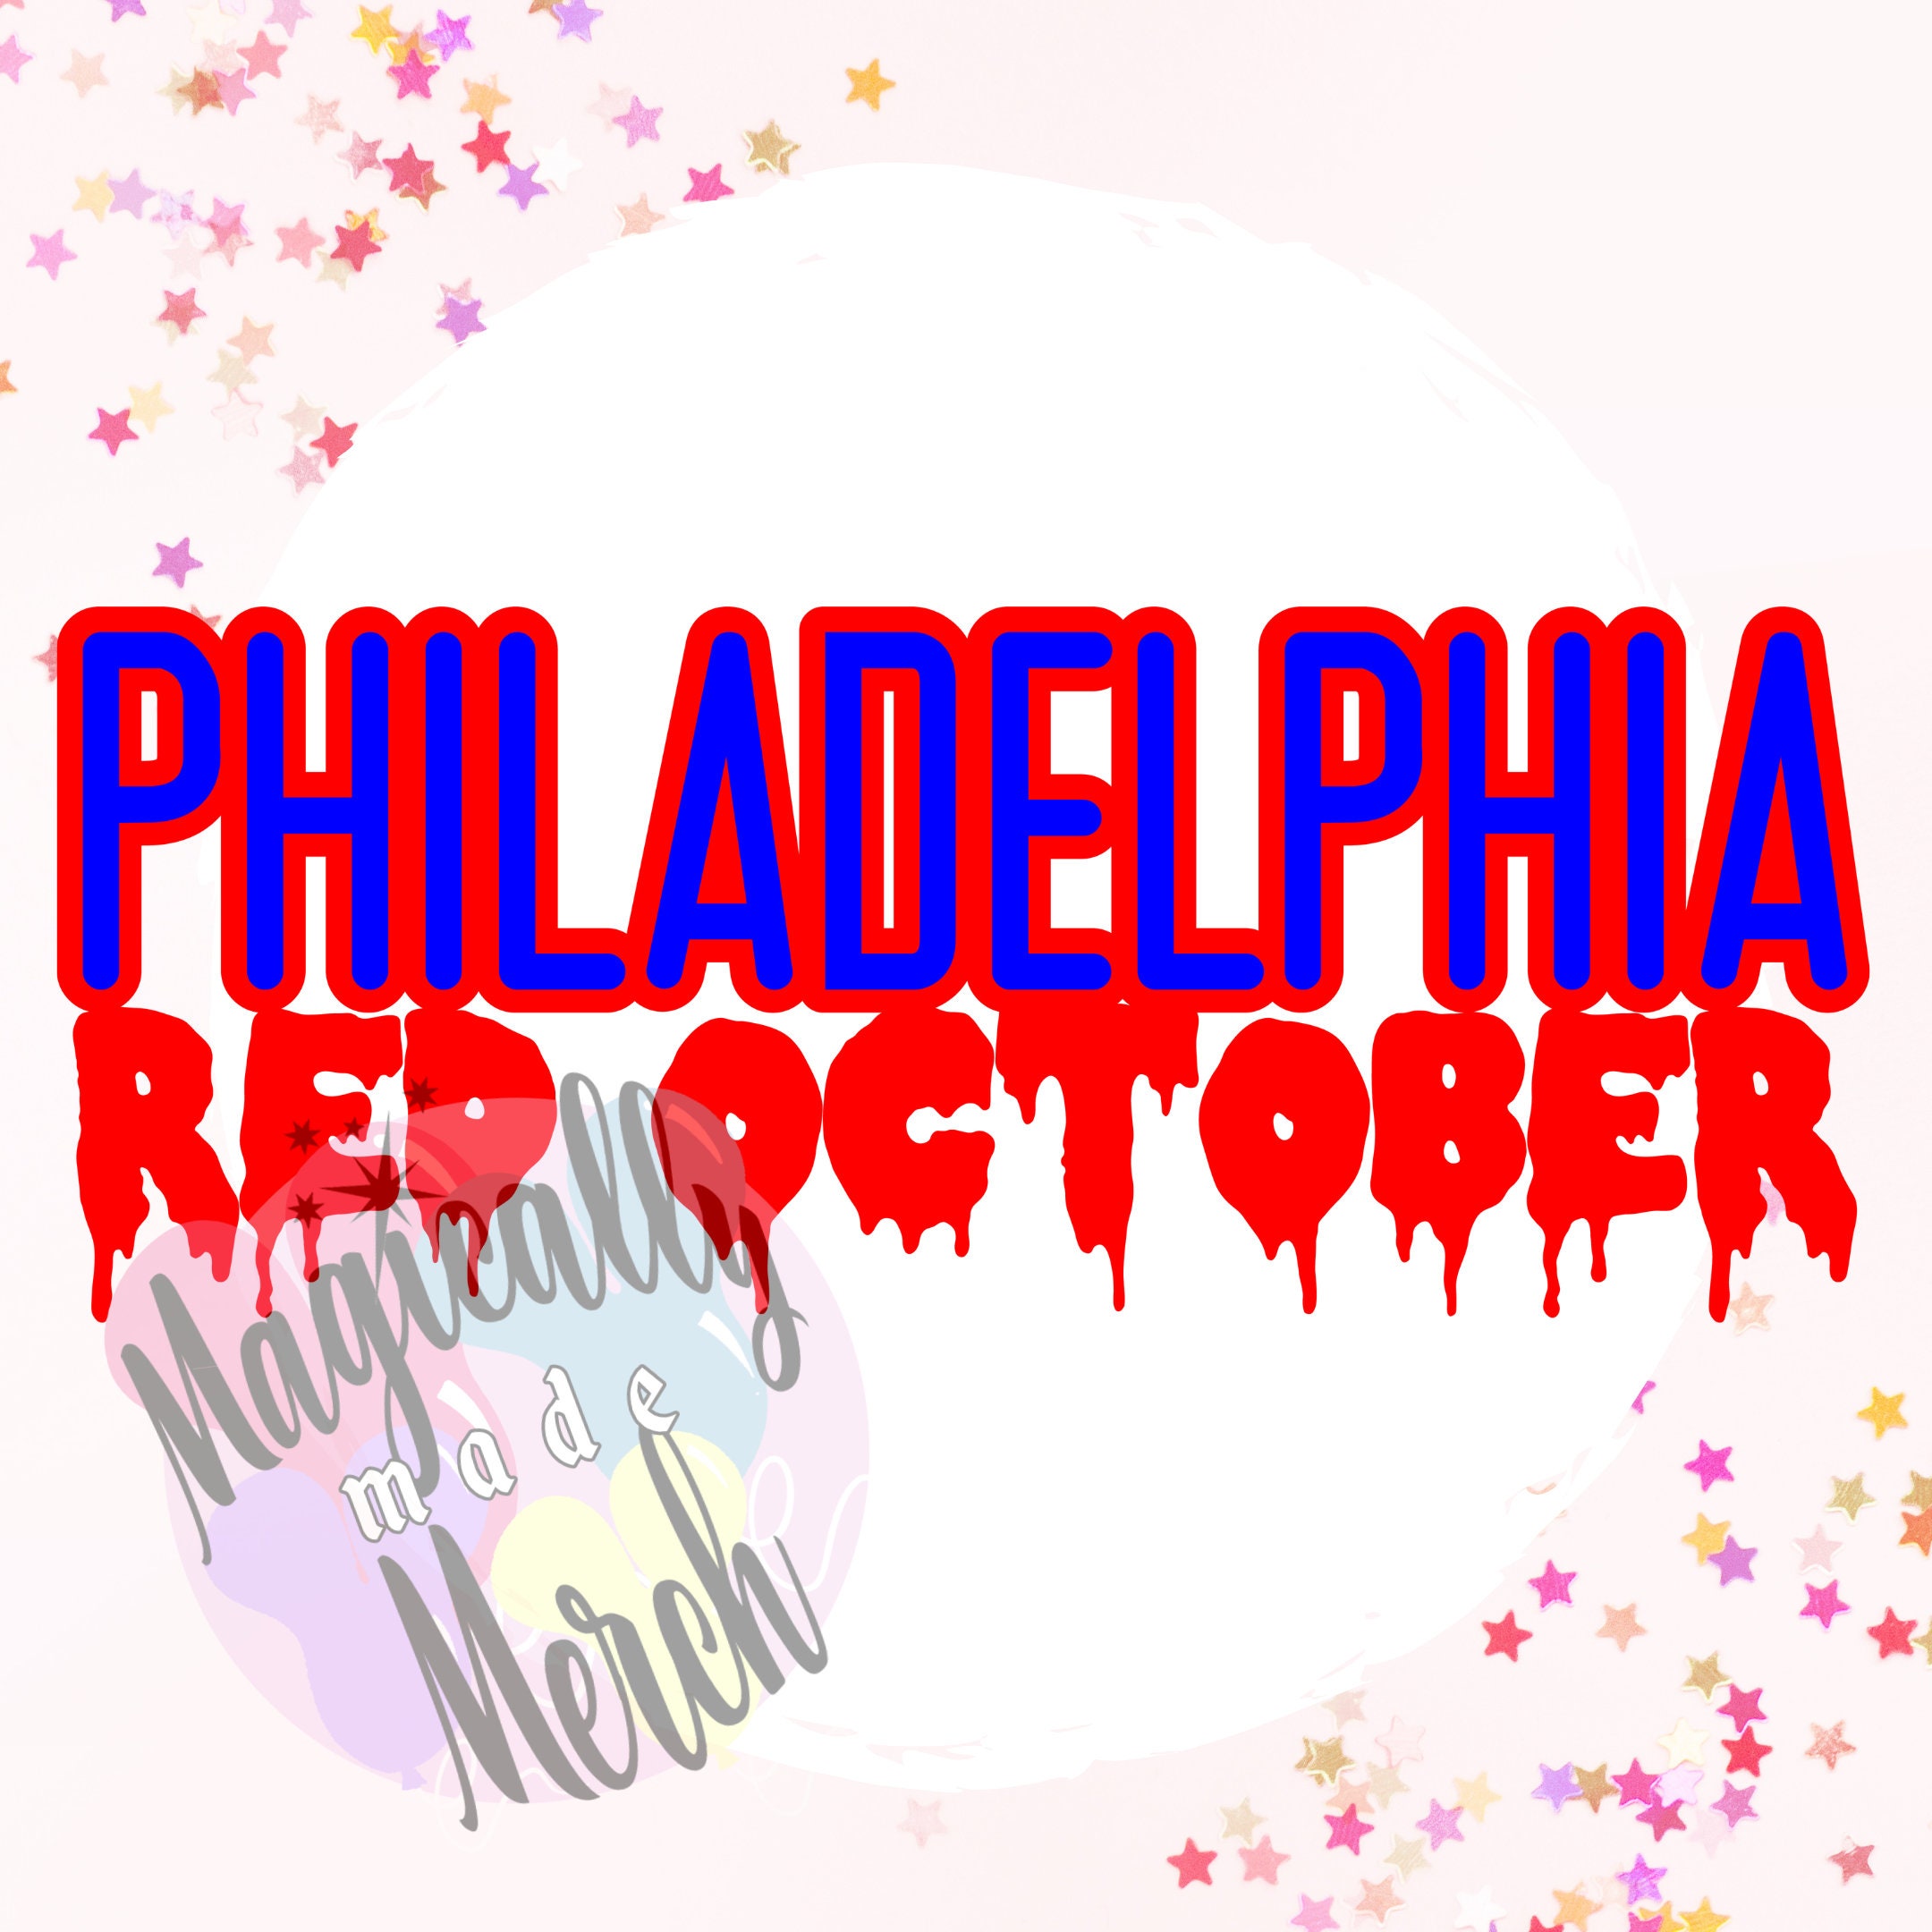 Red Phillies Red October Shirt - Lelemoon